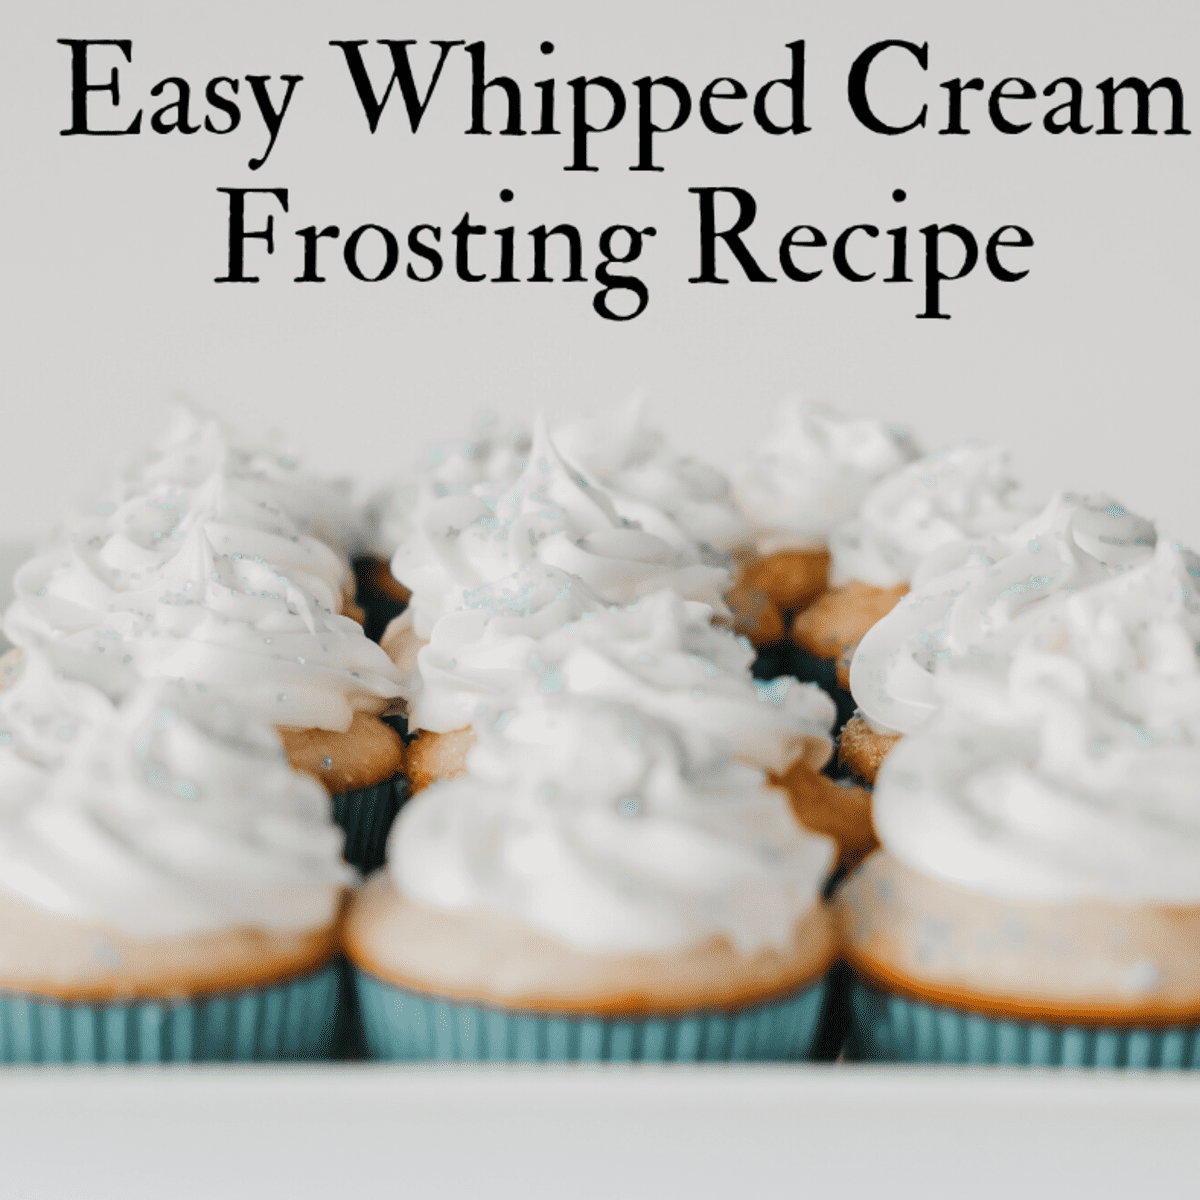 Cookies and Cream Cake Recipe | King Arthur Baking